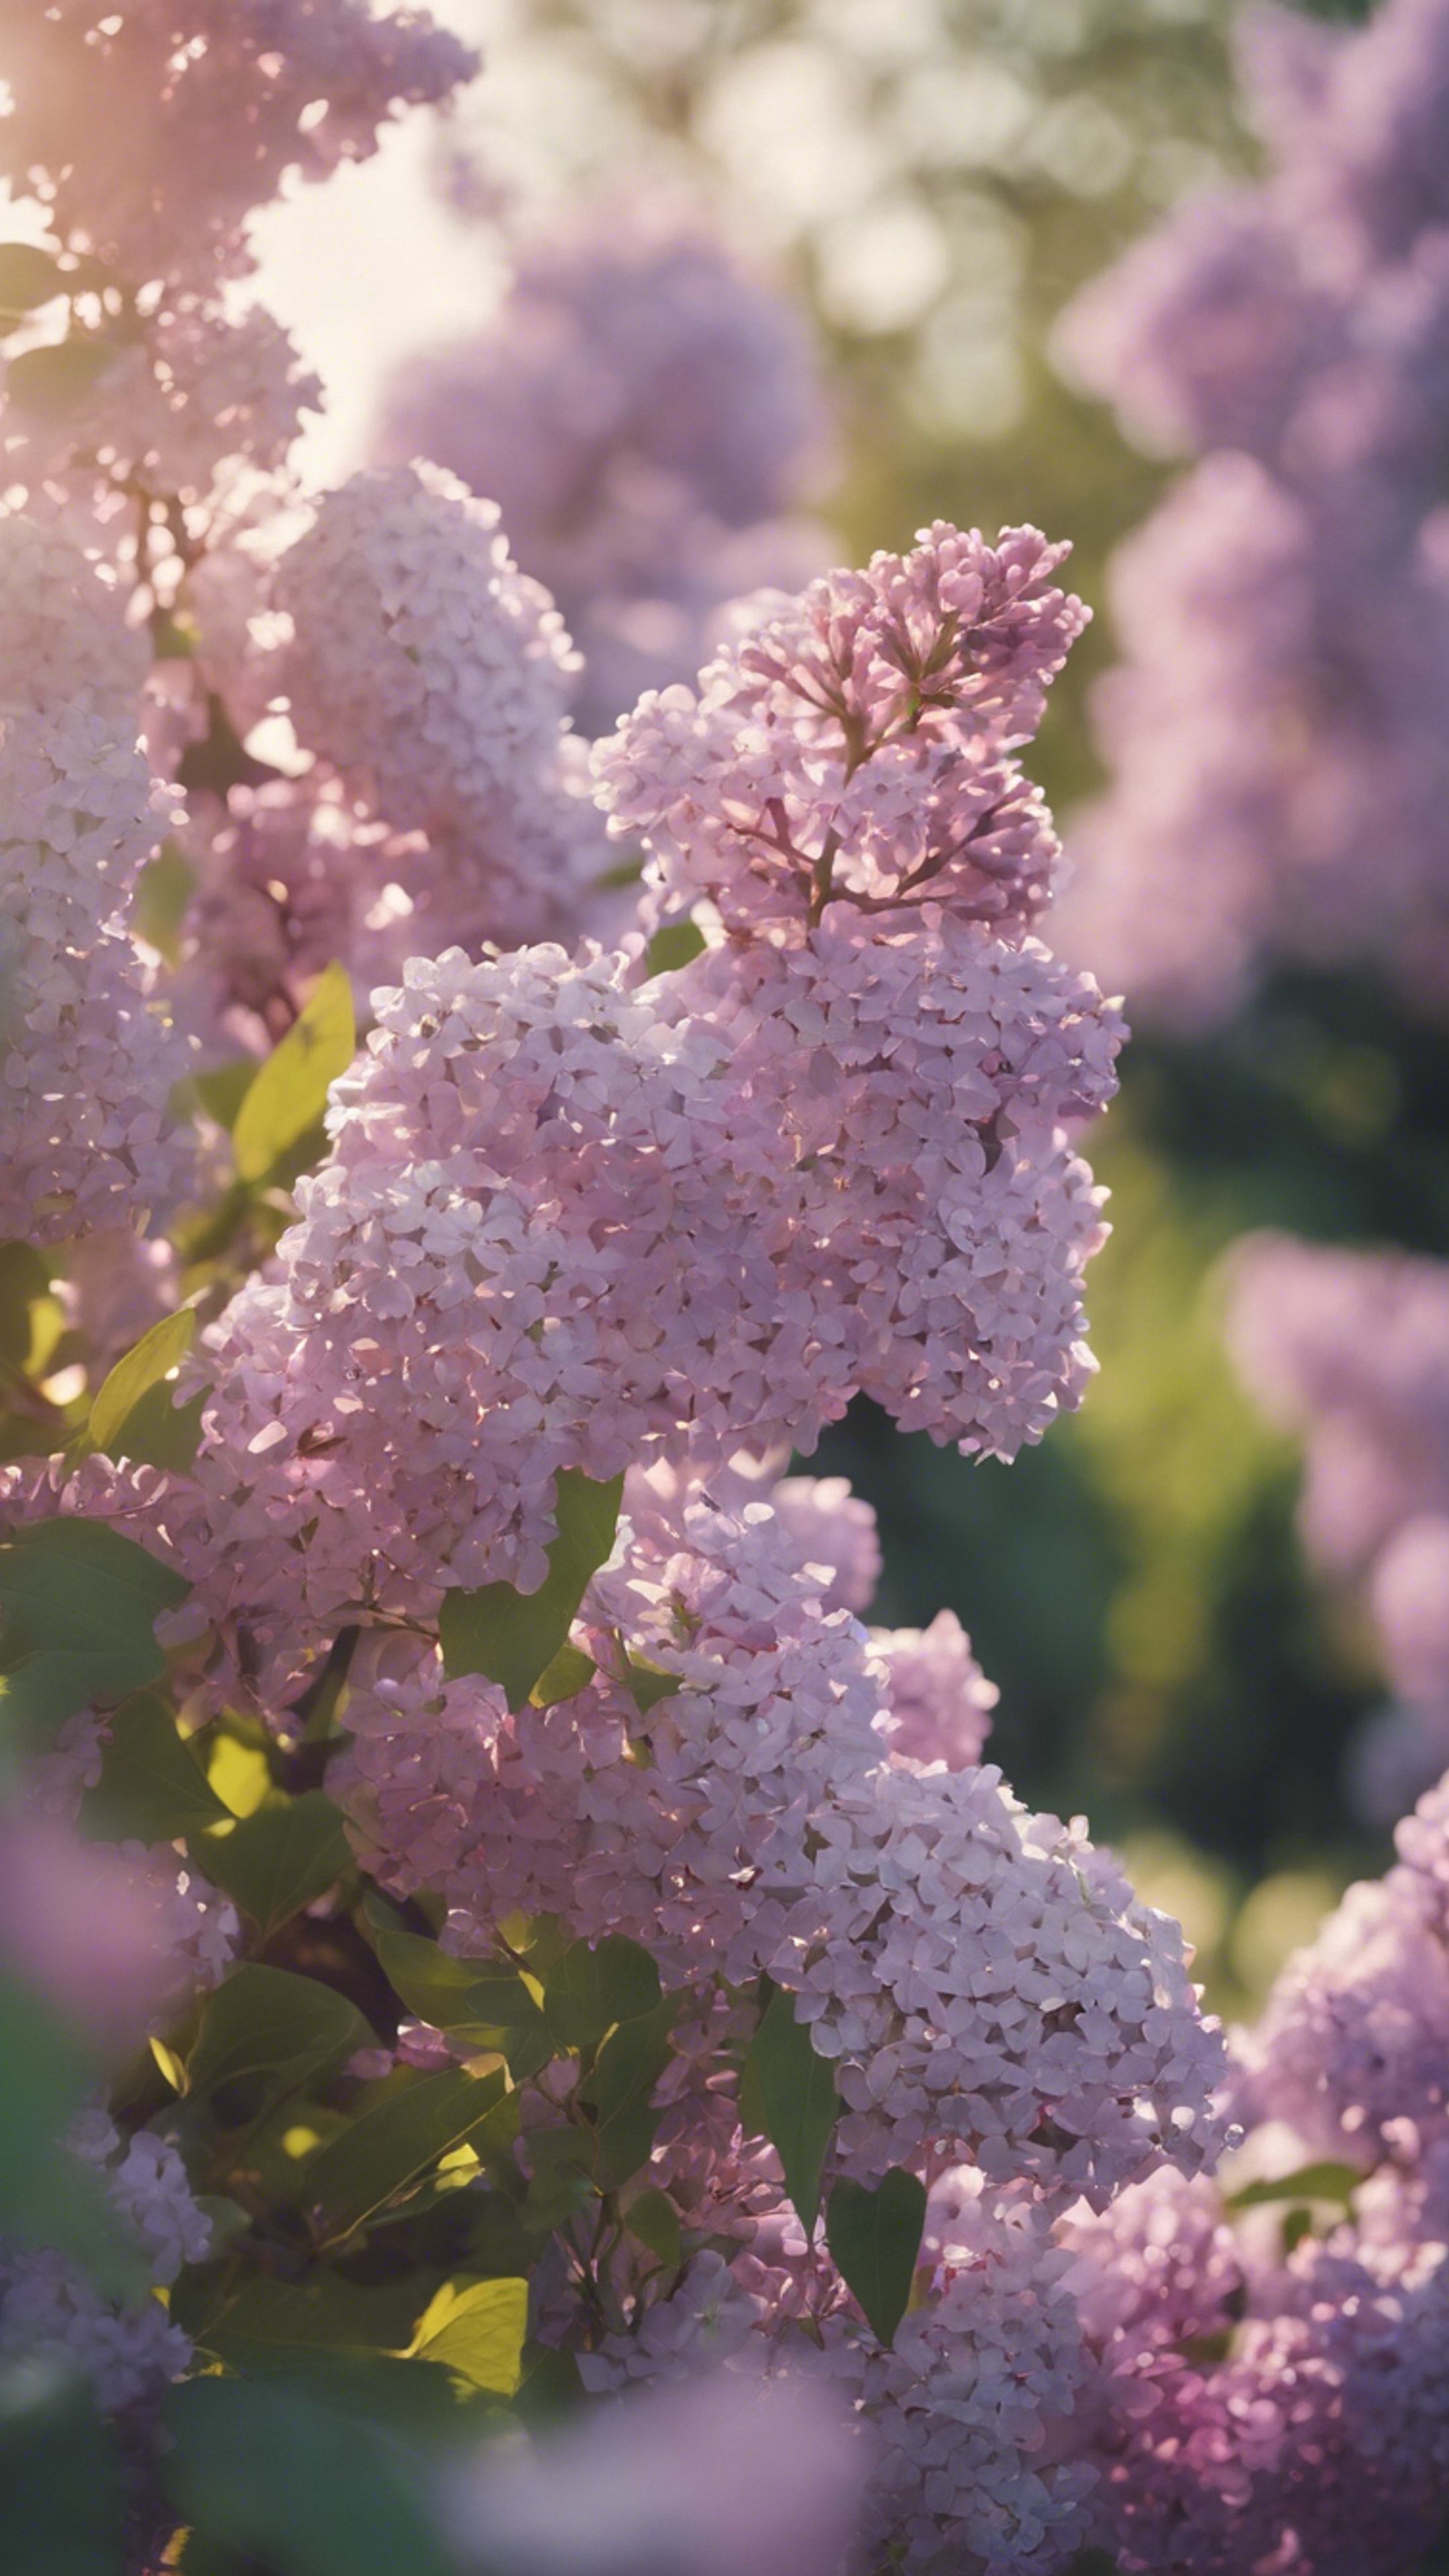 A bountiful garden full of preppy lilac flowers in full bloom under soft sunlight.壁紙[535239431e6946dc9128]